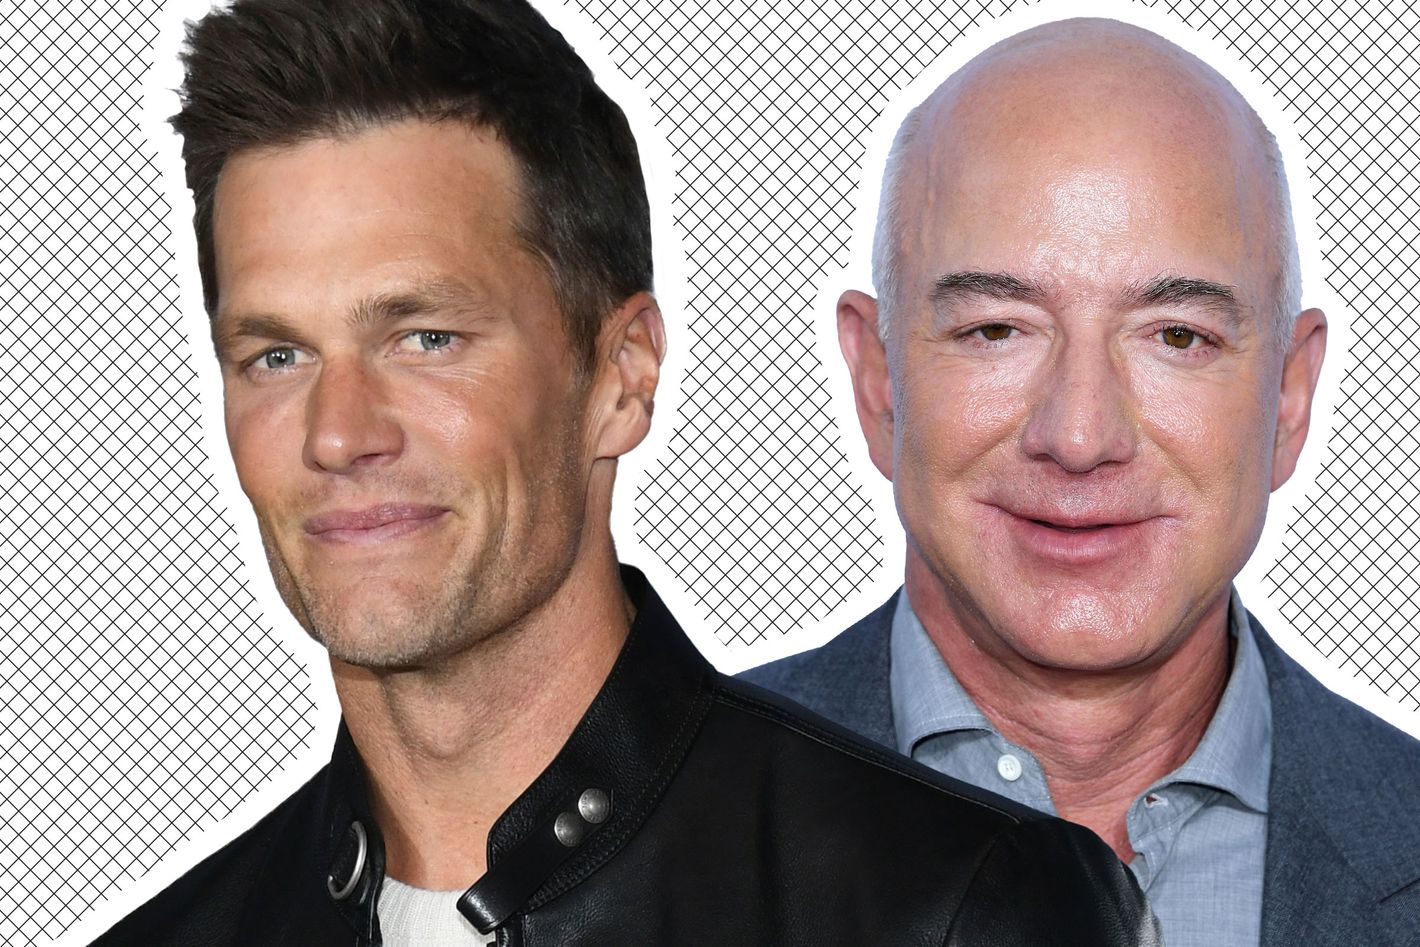 Tom Brady and Jeff Bezos Had a Boys’ Night Out